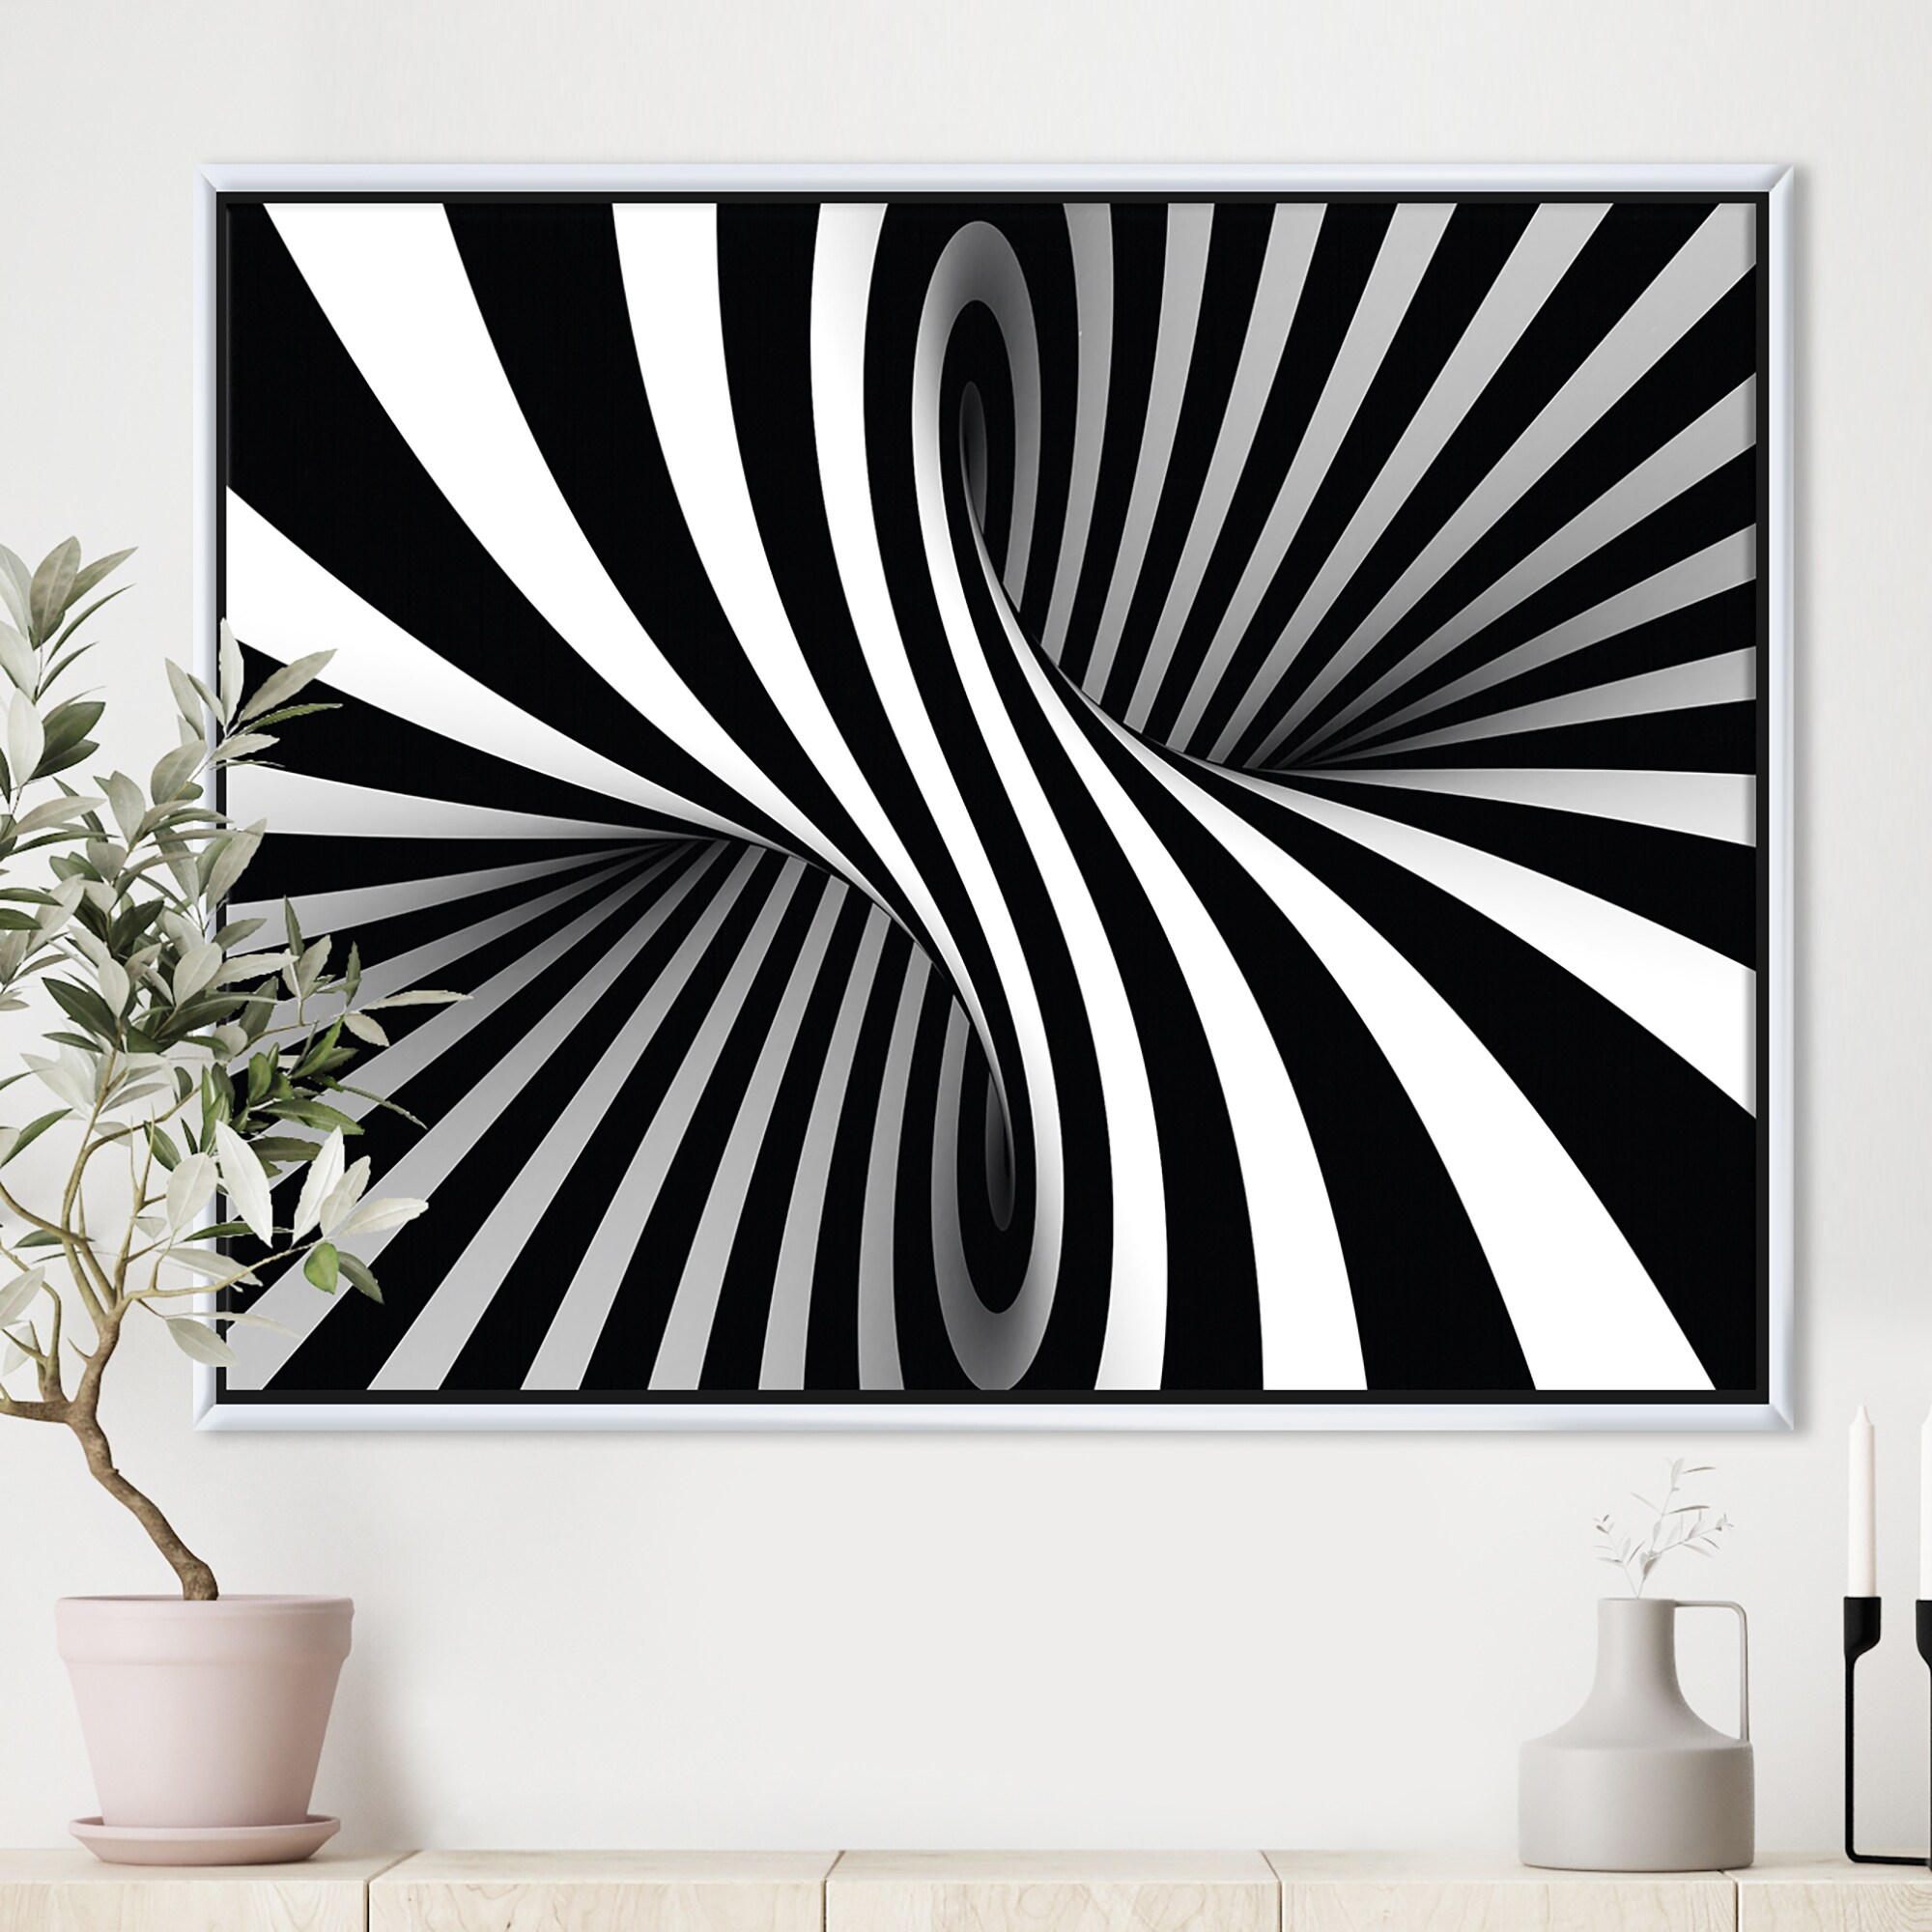 Designart 'Black and White Spiral' Abstract Framed Canvas Art Print